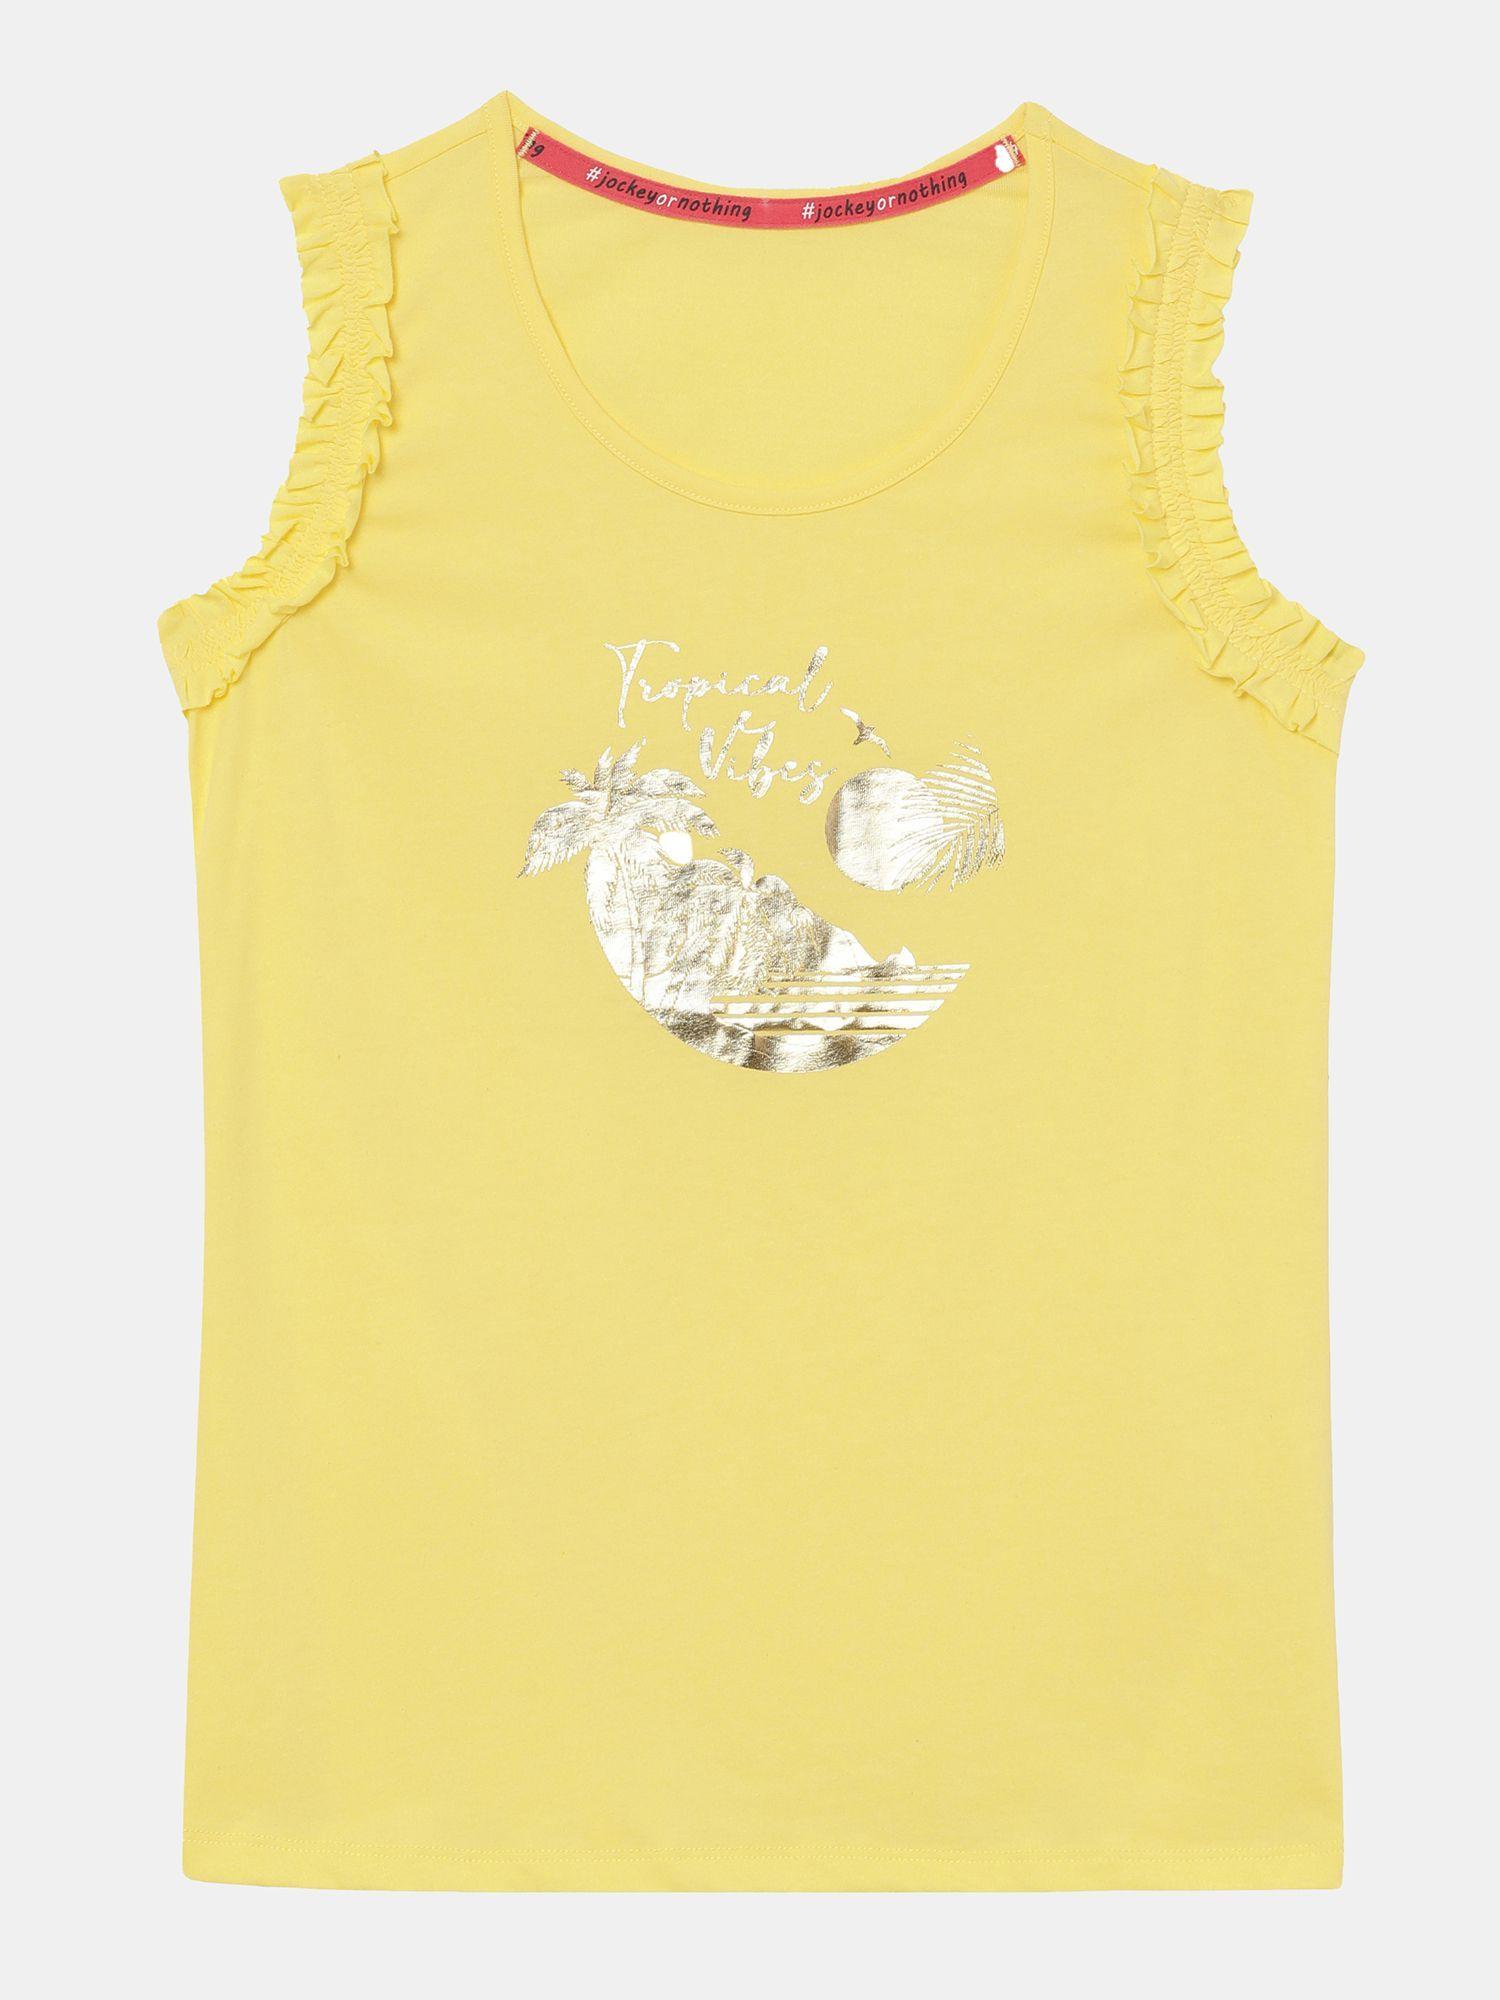 jockey cg19 cotton tank top for girls-yellow